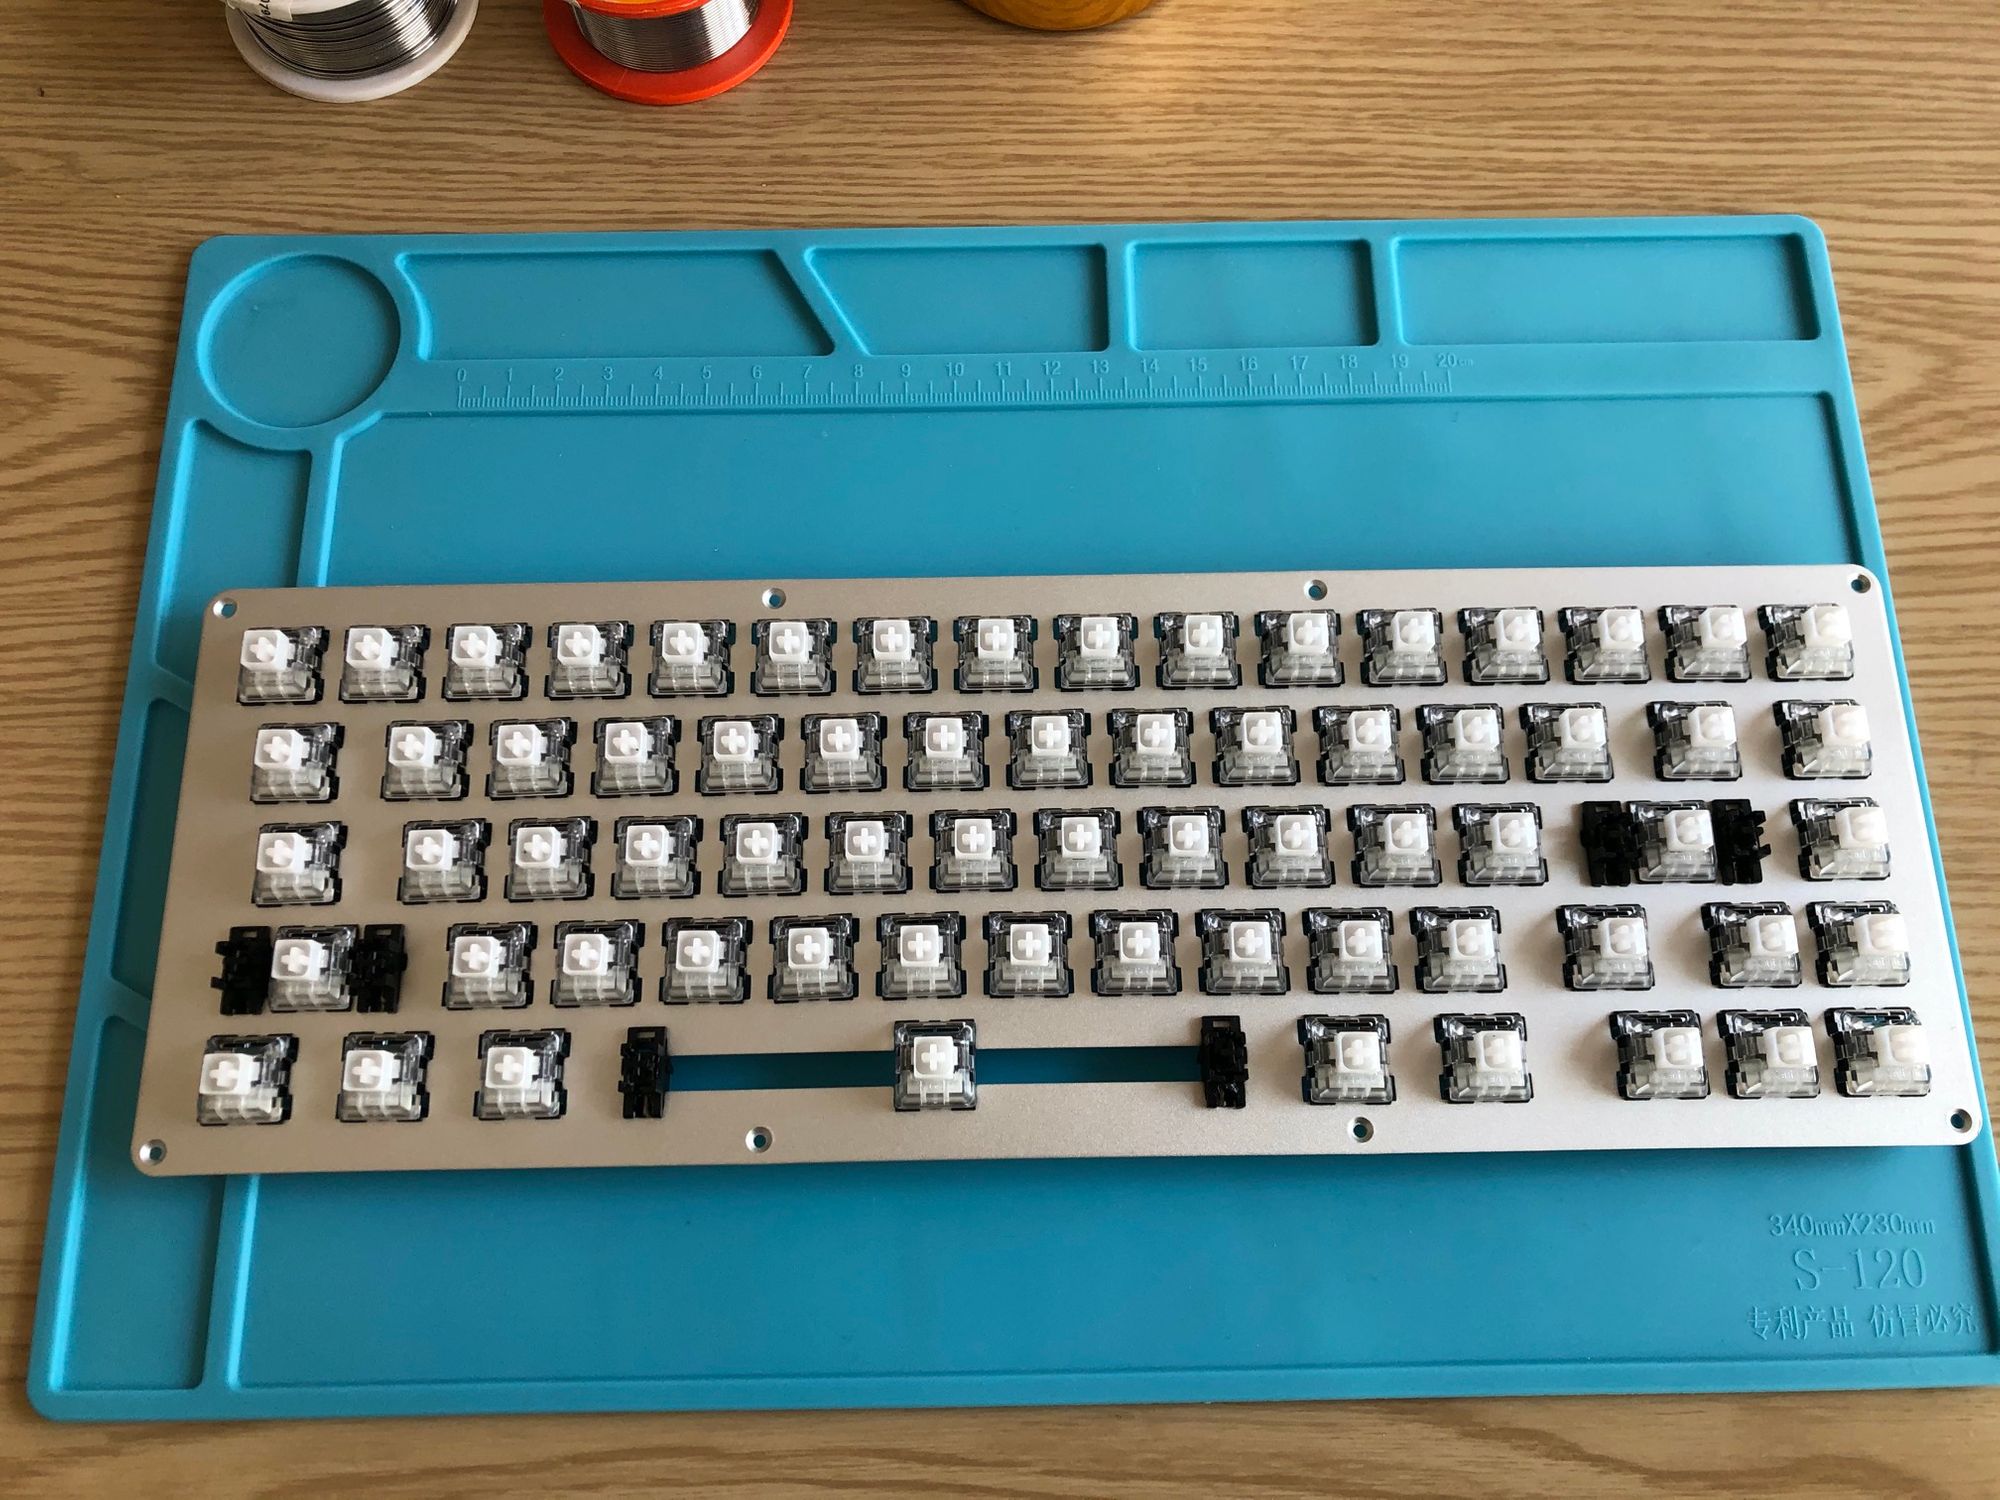 Gallery: building my own mechanical keyboard